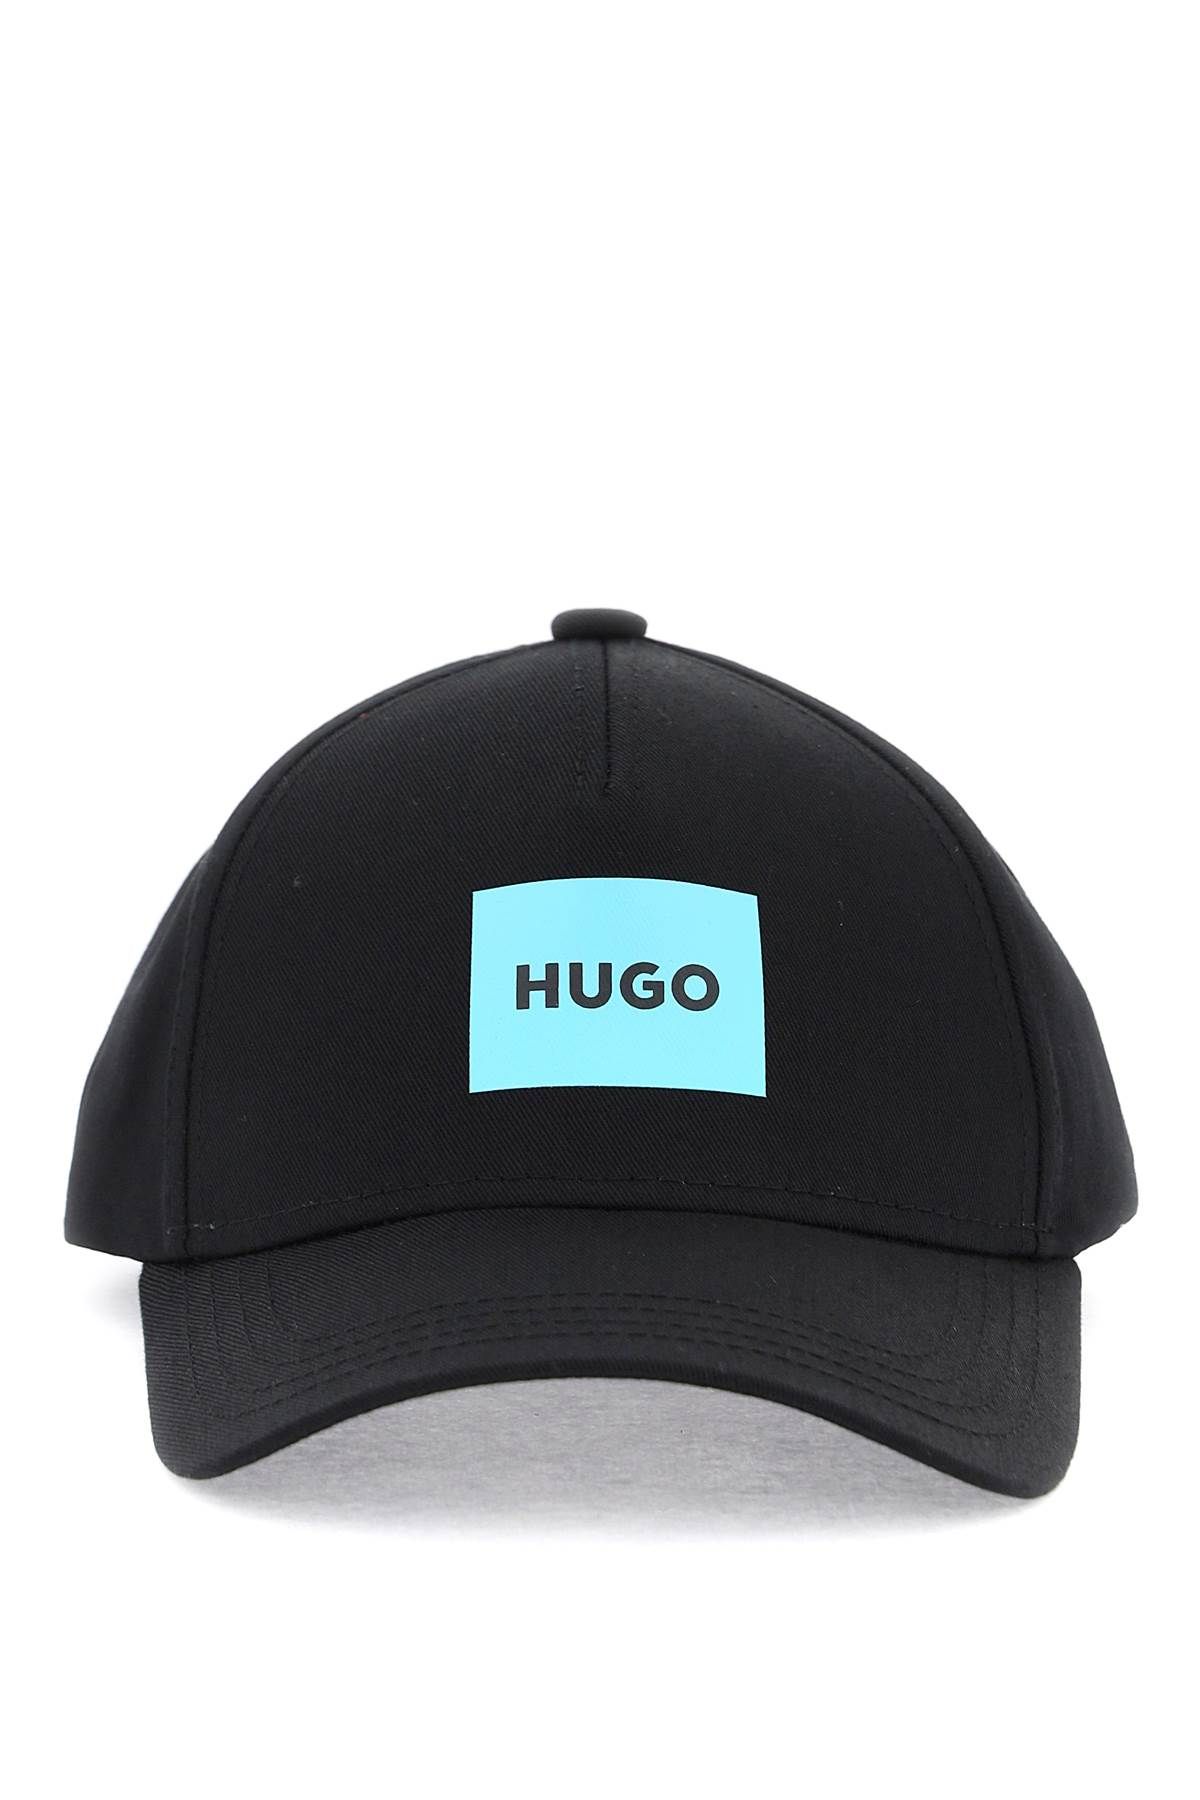 Shop Hugo Baseball Cap With Patch Design In Black